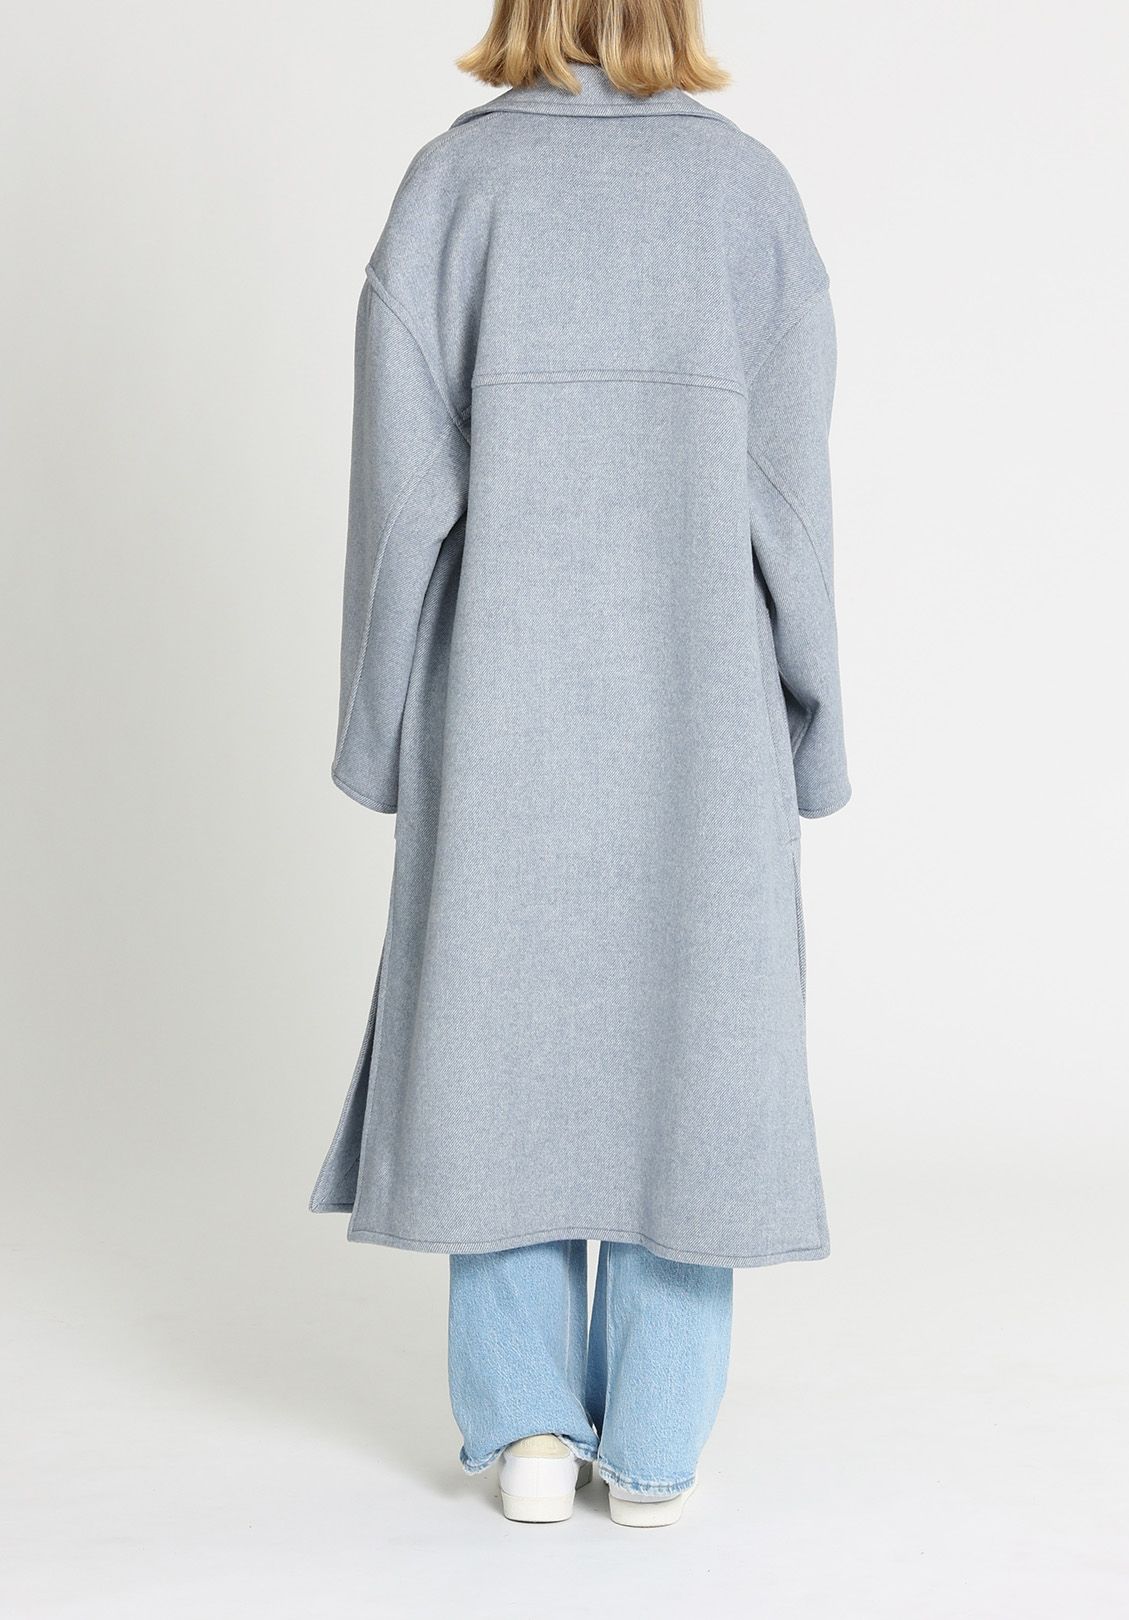 Shona Joy Azzurra Oversized Long Coat Blue Smoke Long Sleeves